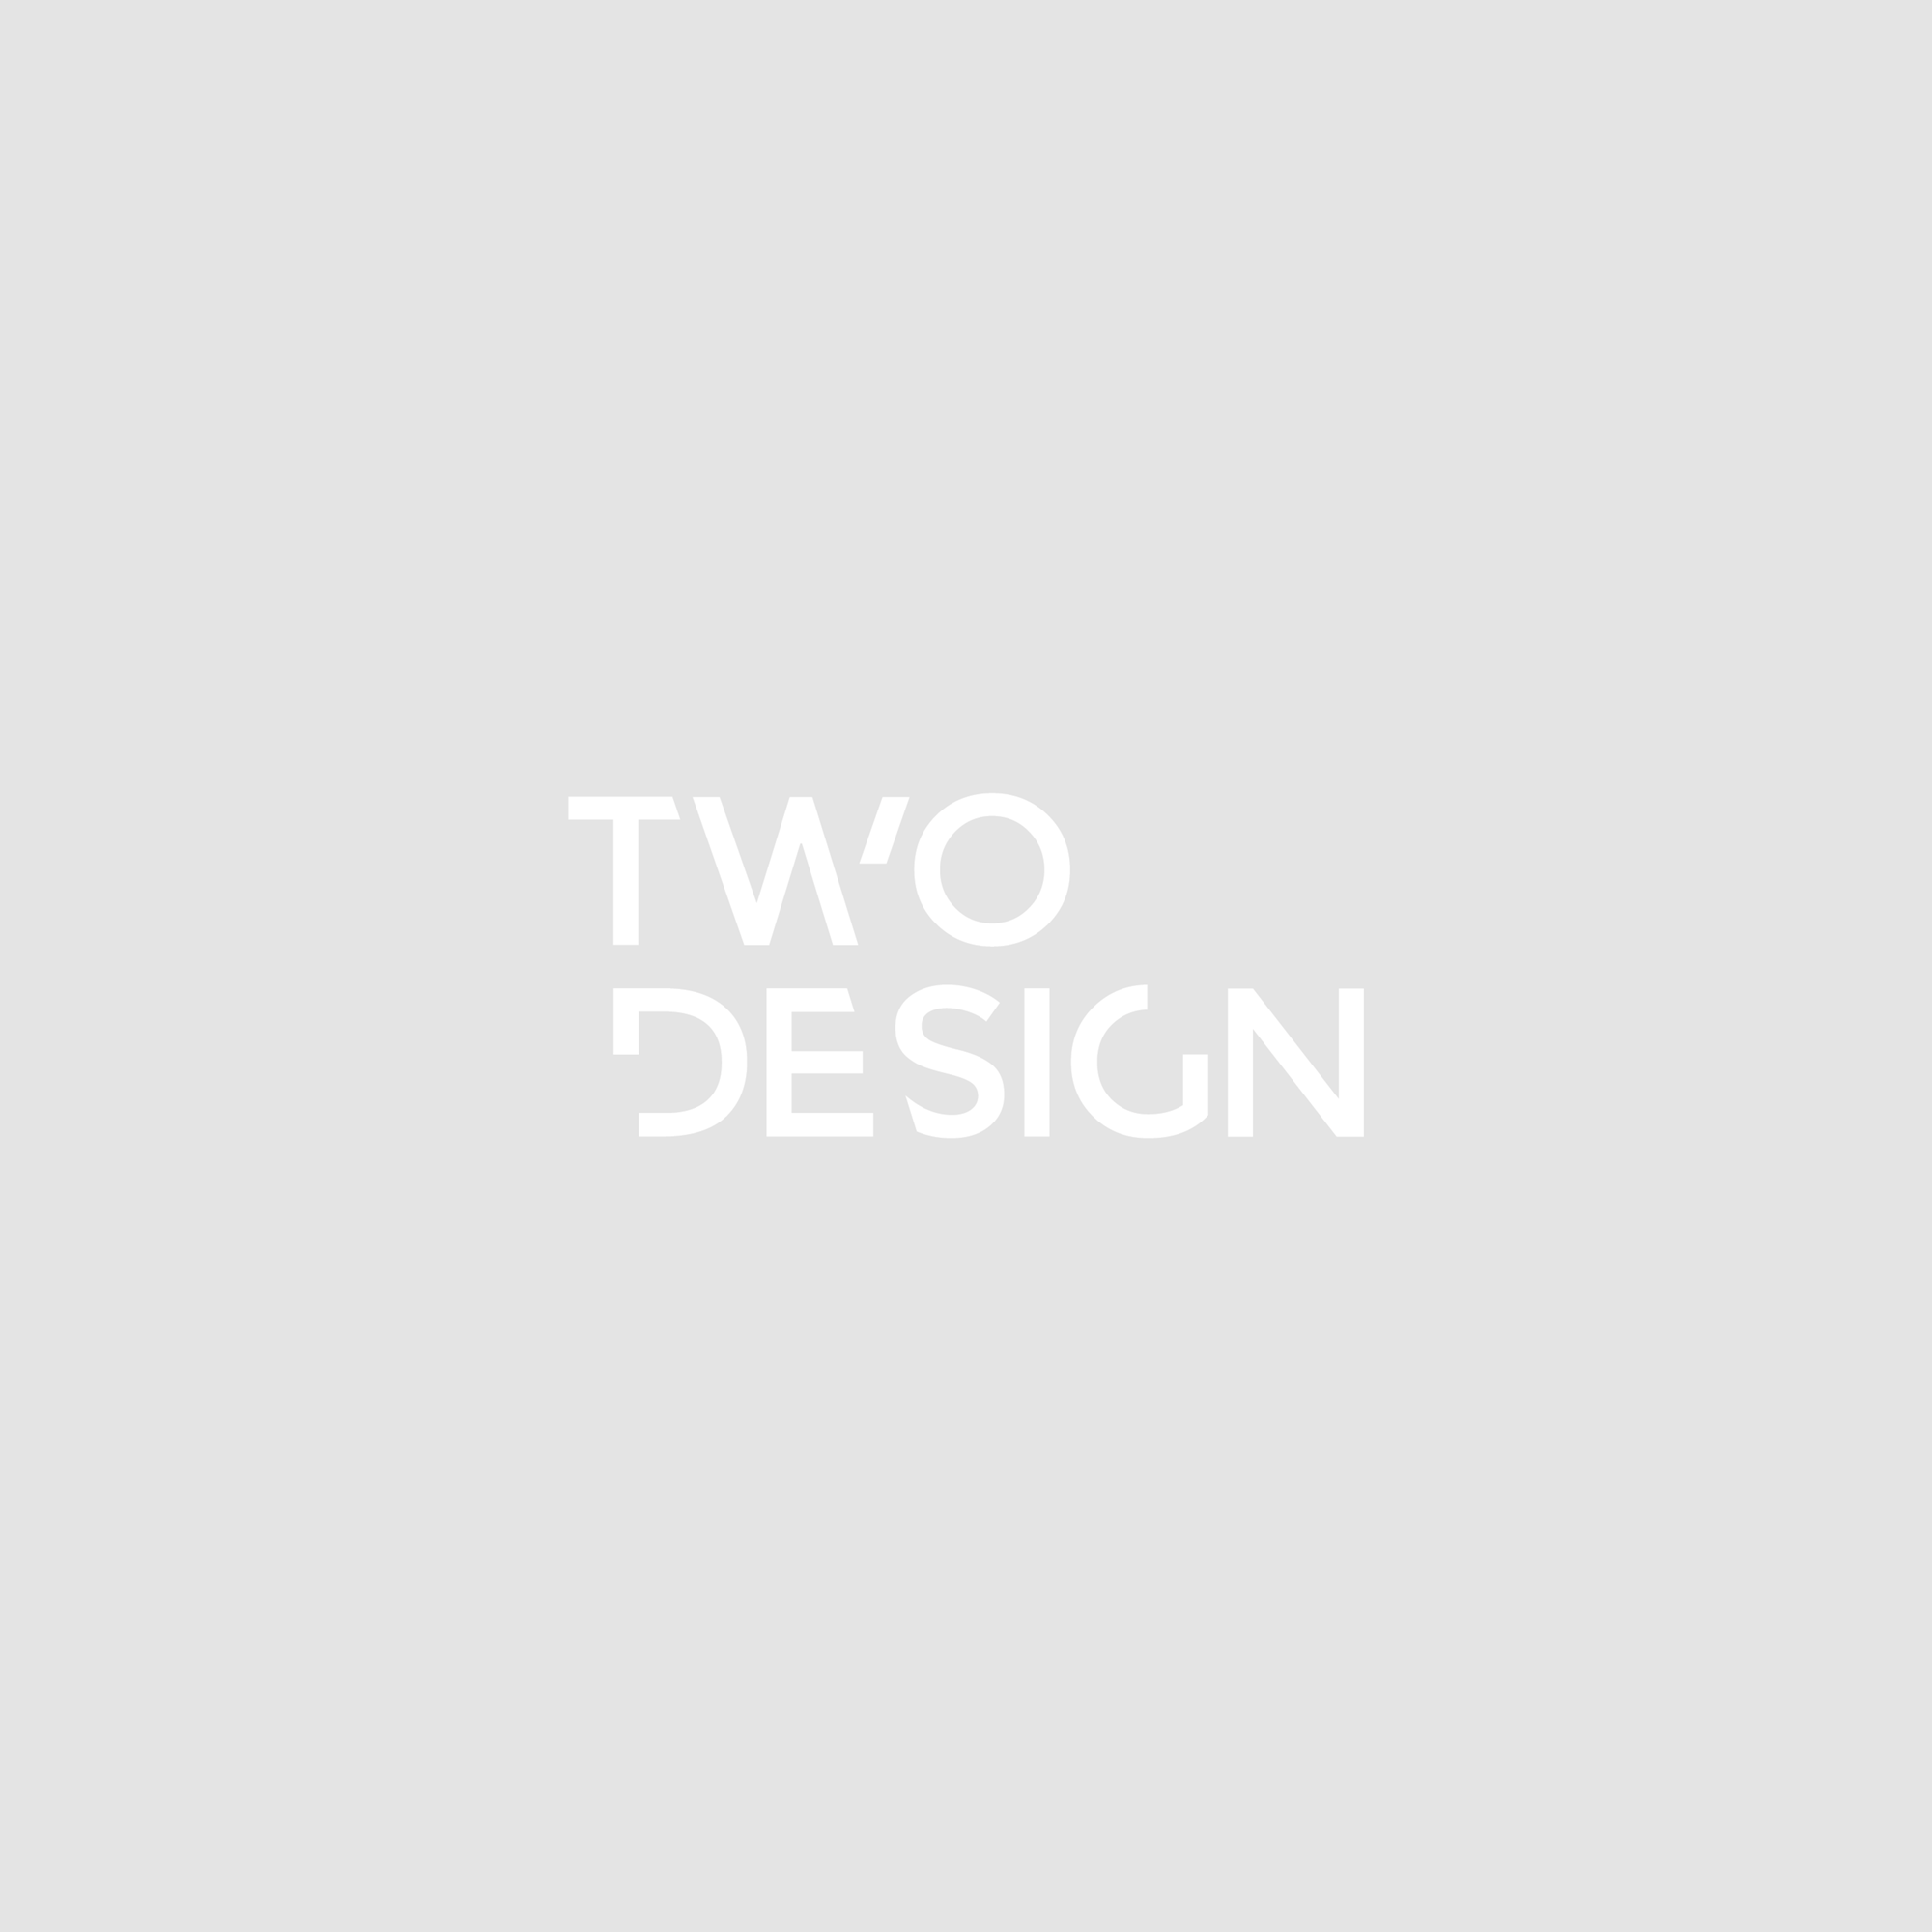 Two_design_placeholder 8.jpg